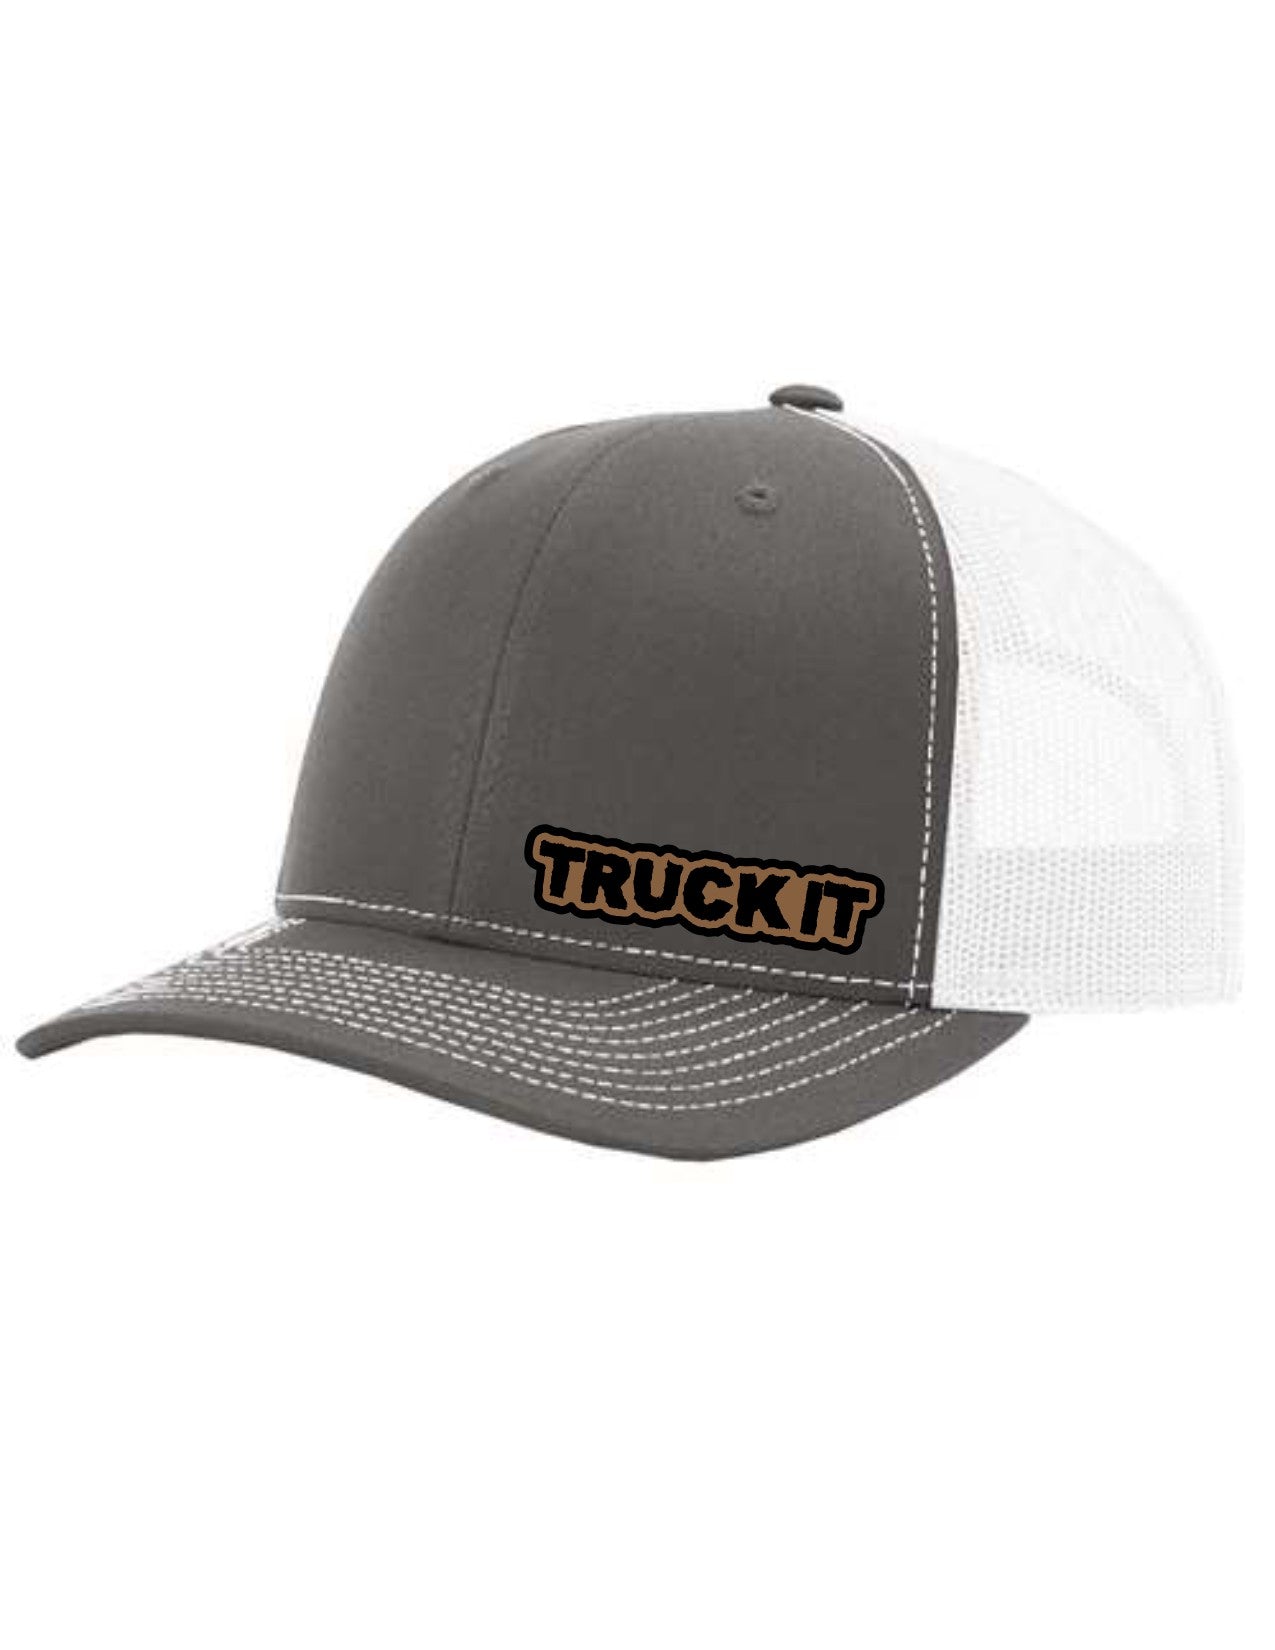 Truck It Leather Patch Richardson 112 Trucker Hat